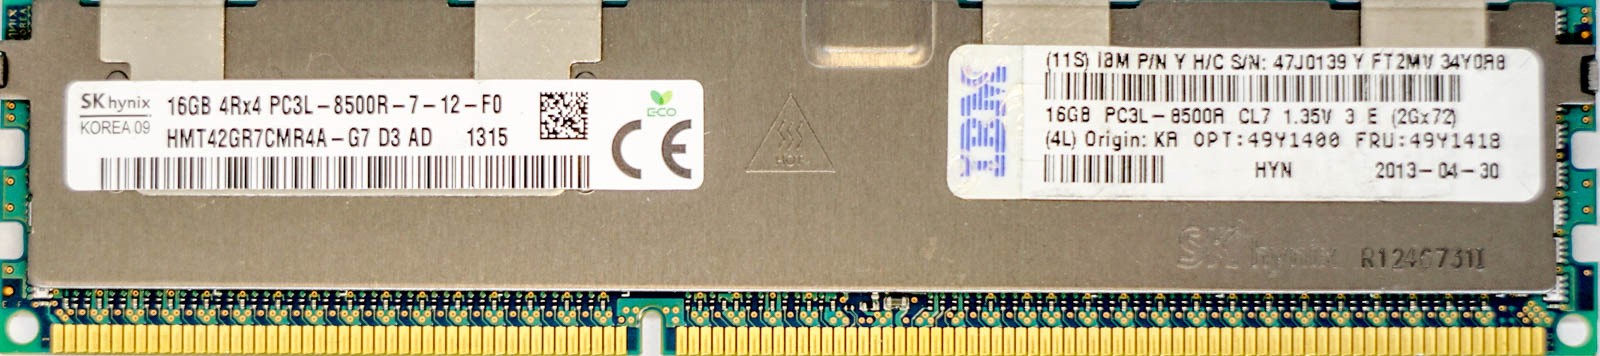 IBM (47J0139) - 16GB PC3L-8500R (DDR3-1066Mhz, 4RX4)